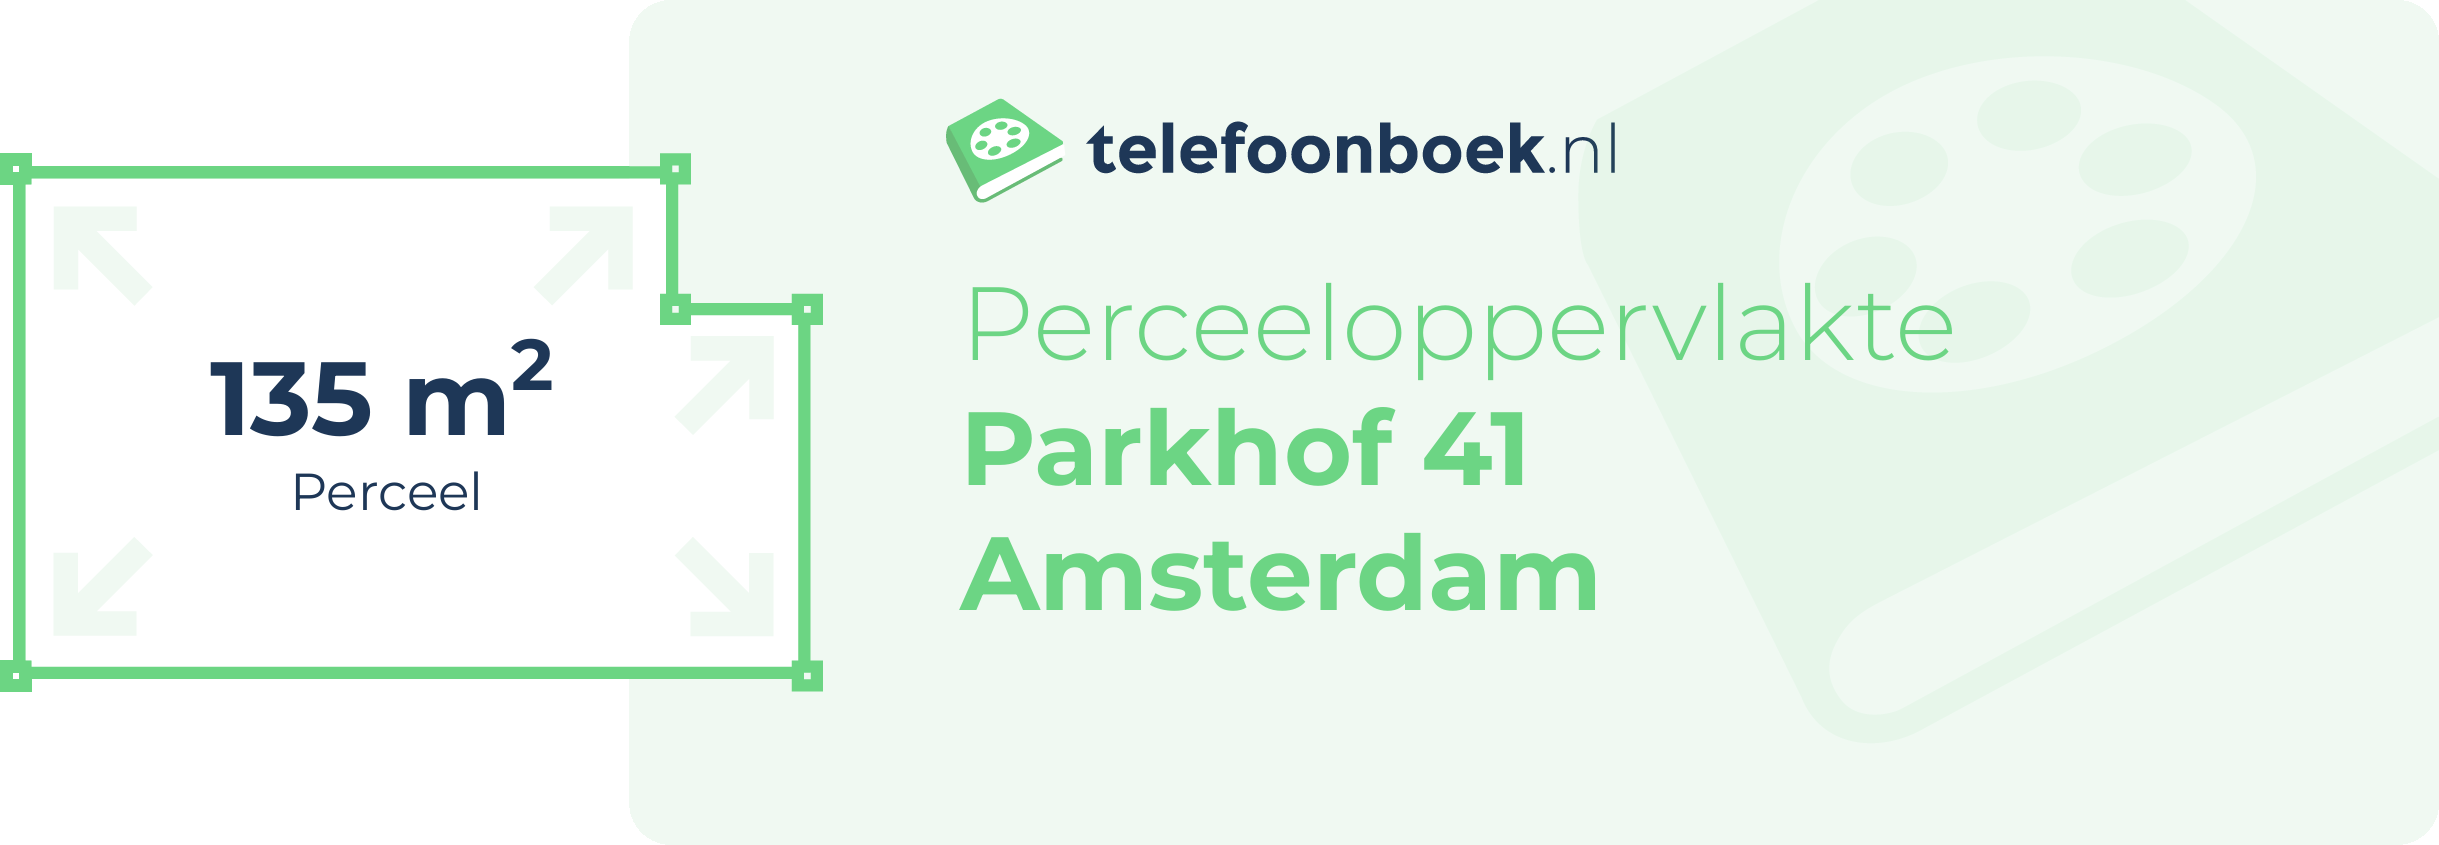 Perceeloppervlakte Parkhof 41 Amsterdam